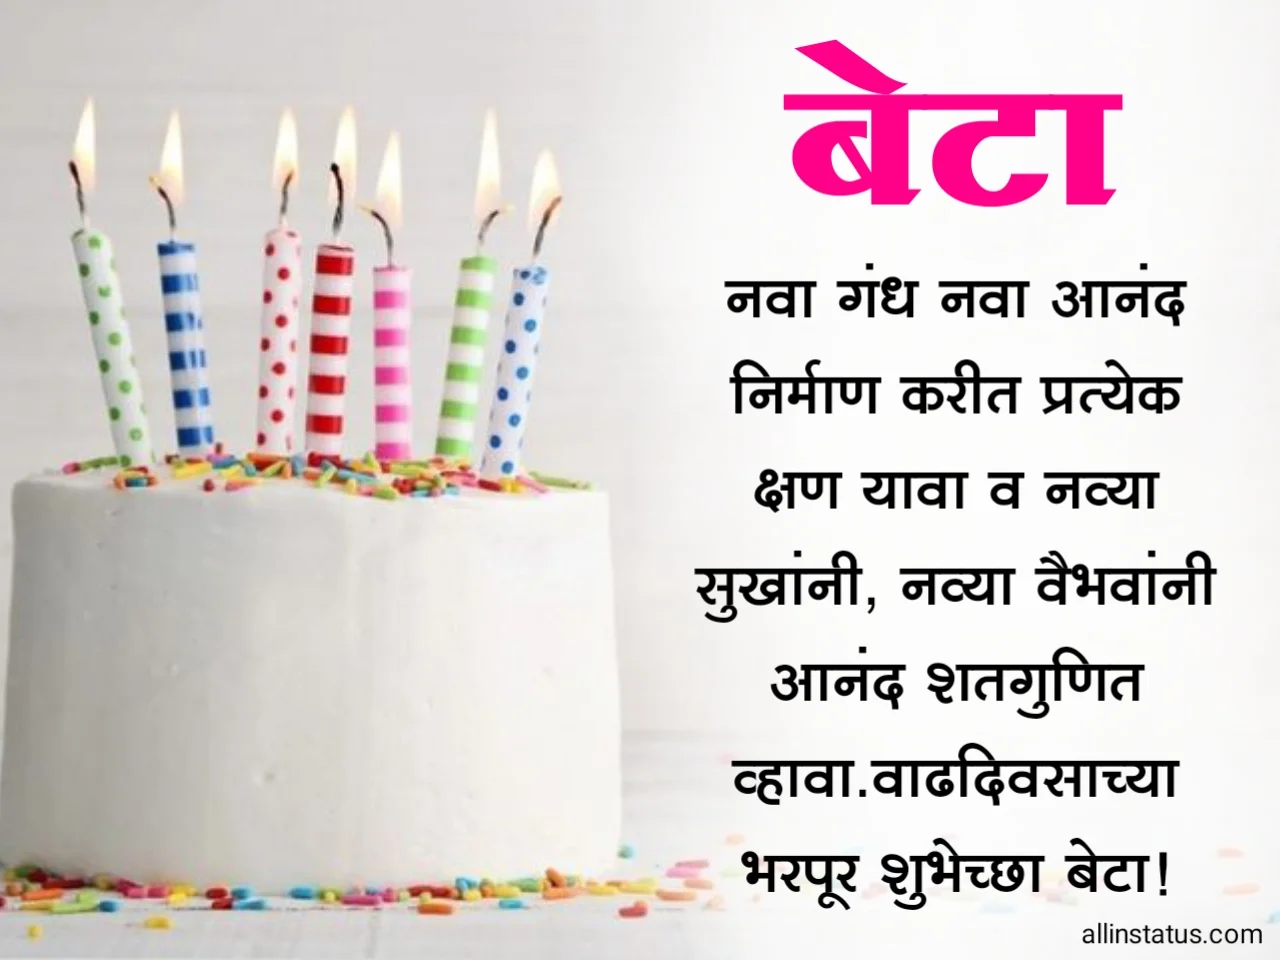 Birthday Image for son in marathi